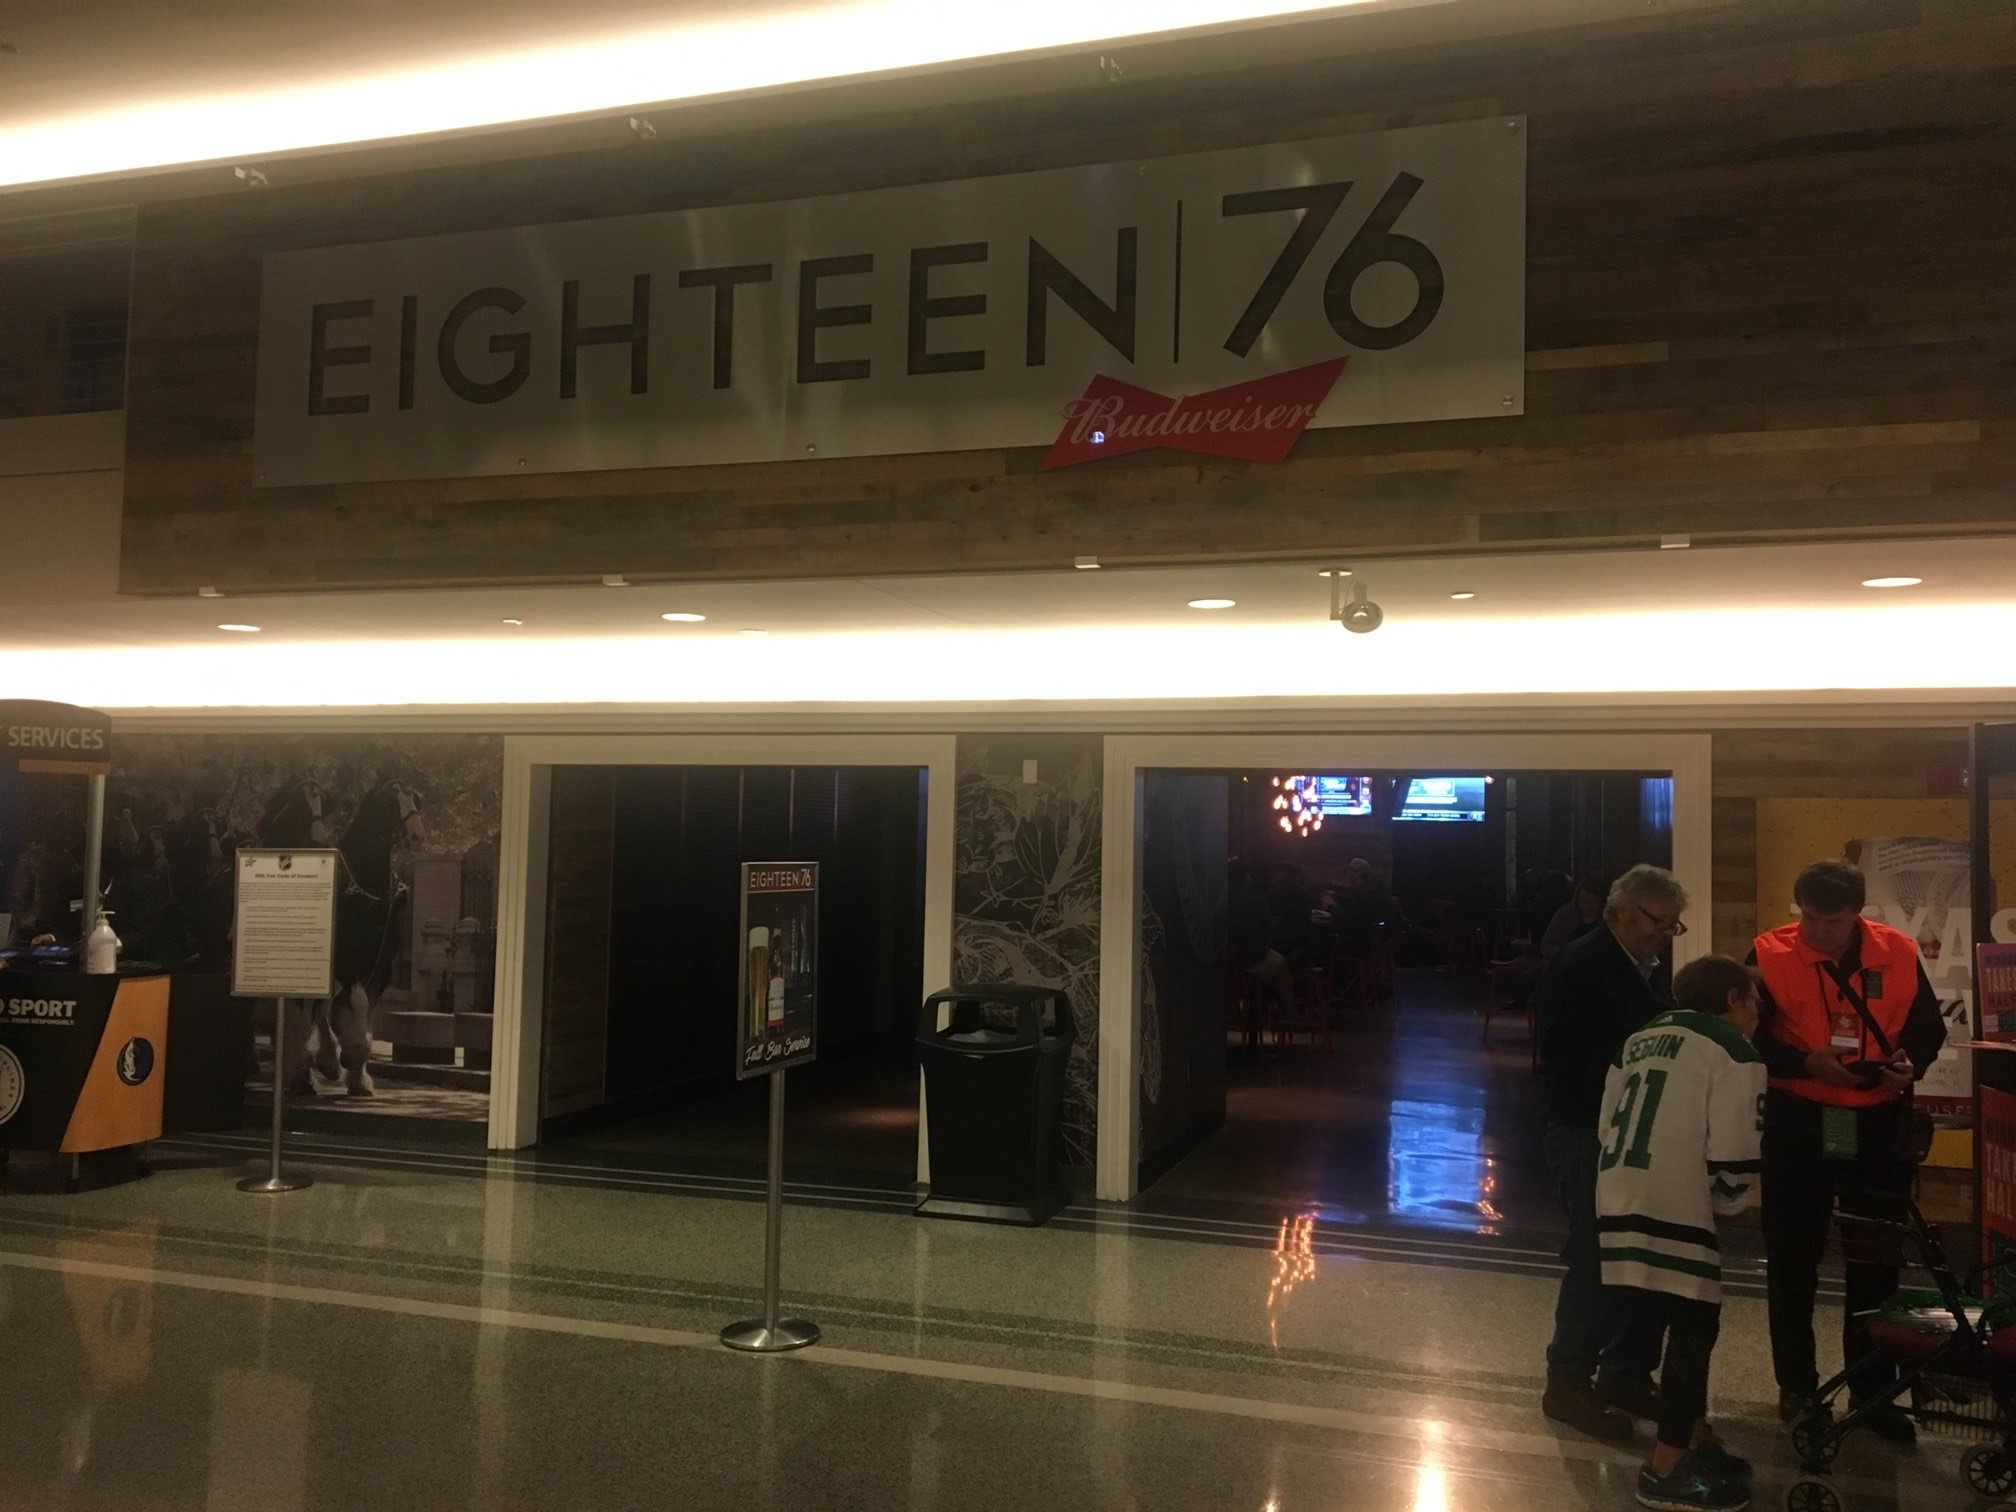 American Airlines Center Eighteen 76